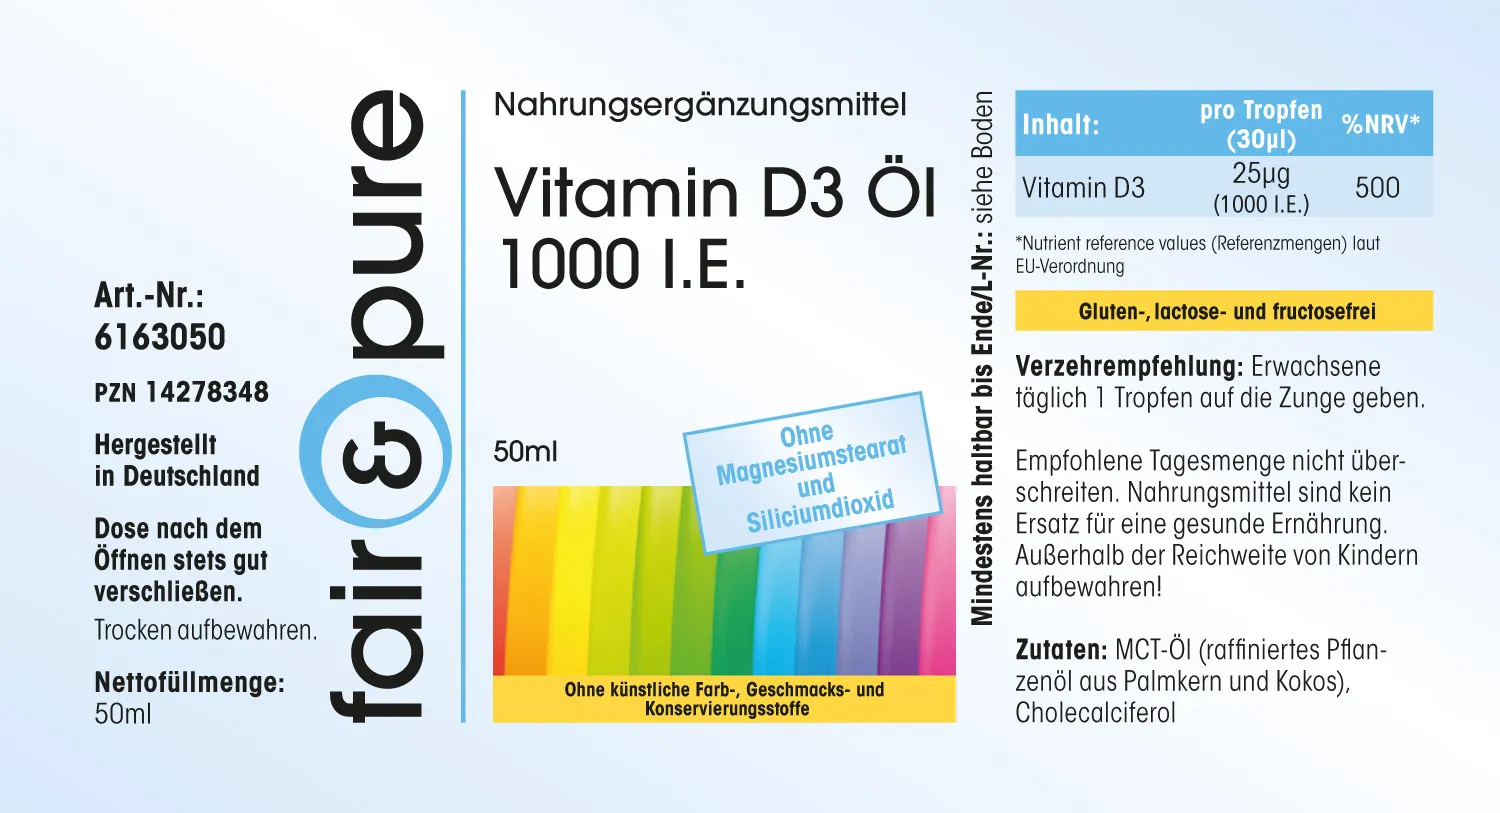 Vitamine D3 liquide 1000 U.I.